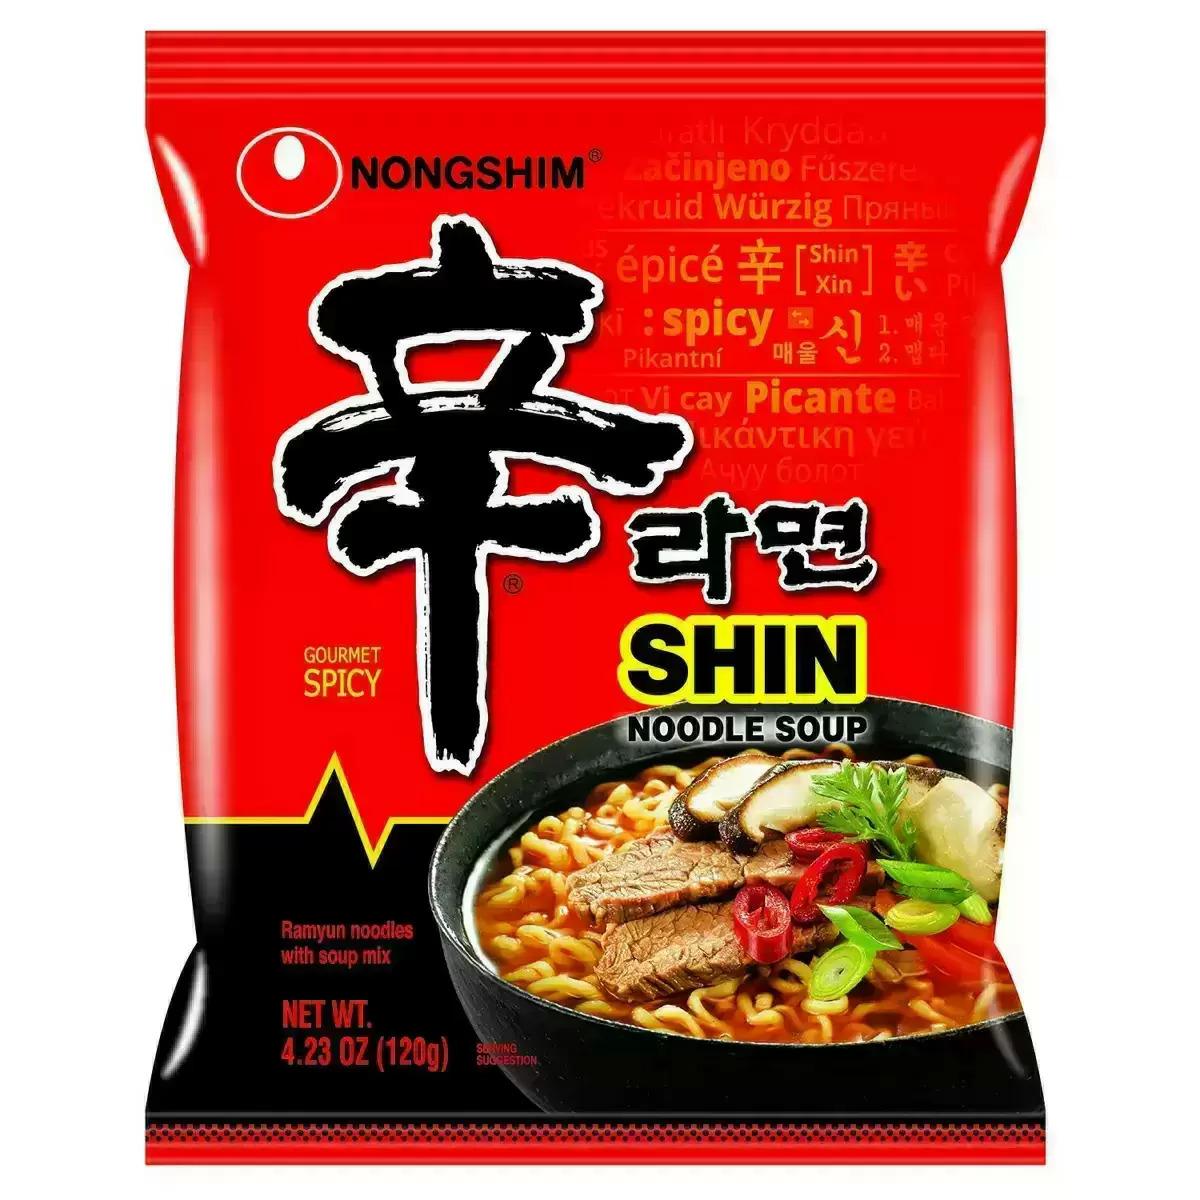 Nongshim Shin Ramyun Noodle Soup 20 Pack for $16.14 Shipped